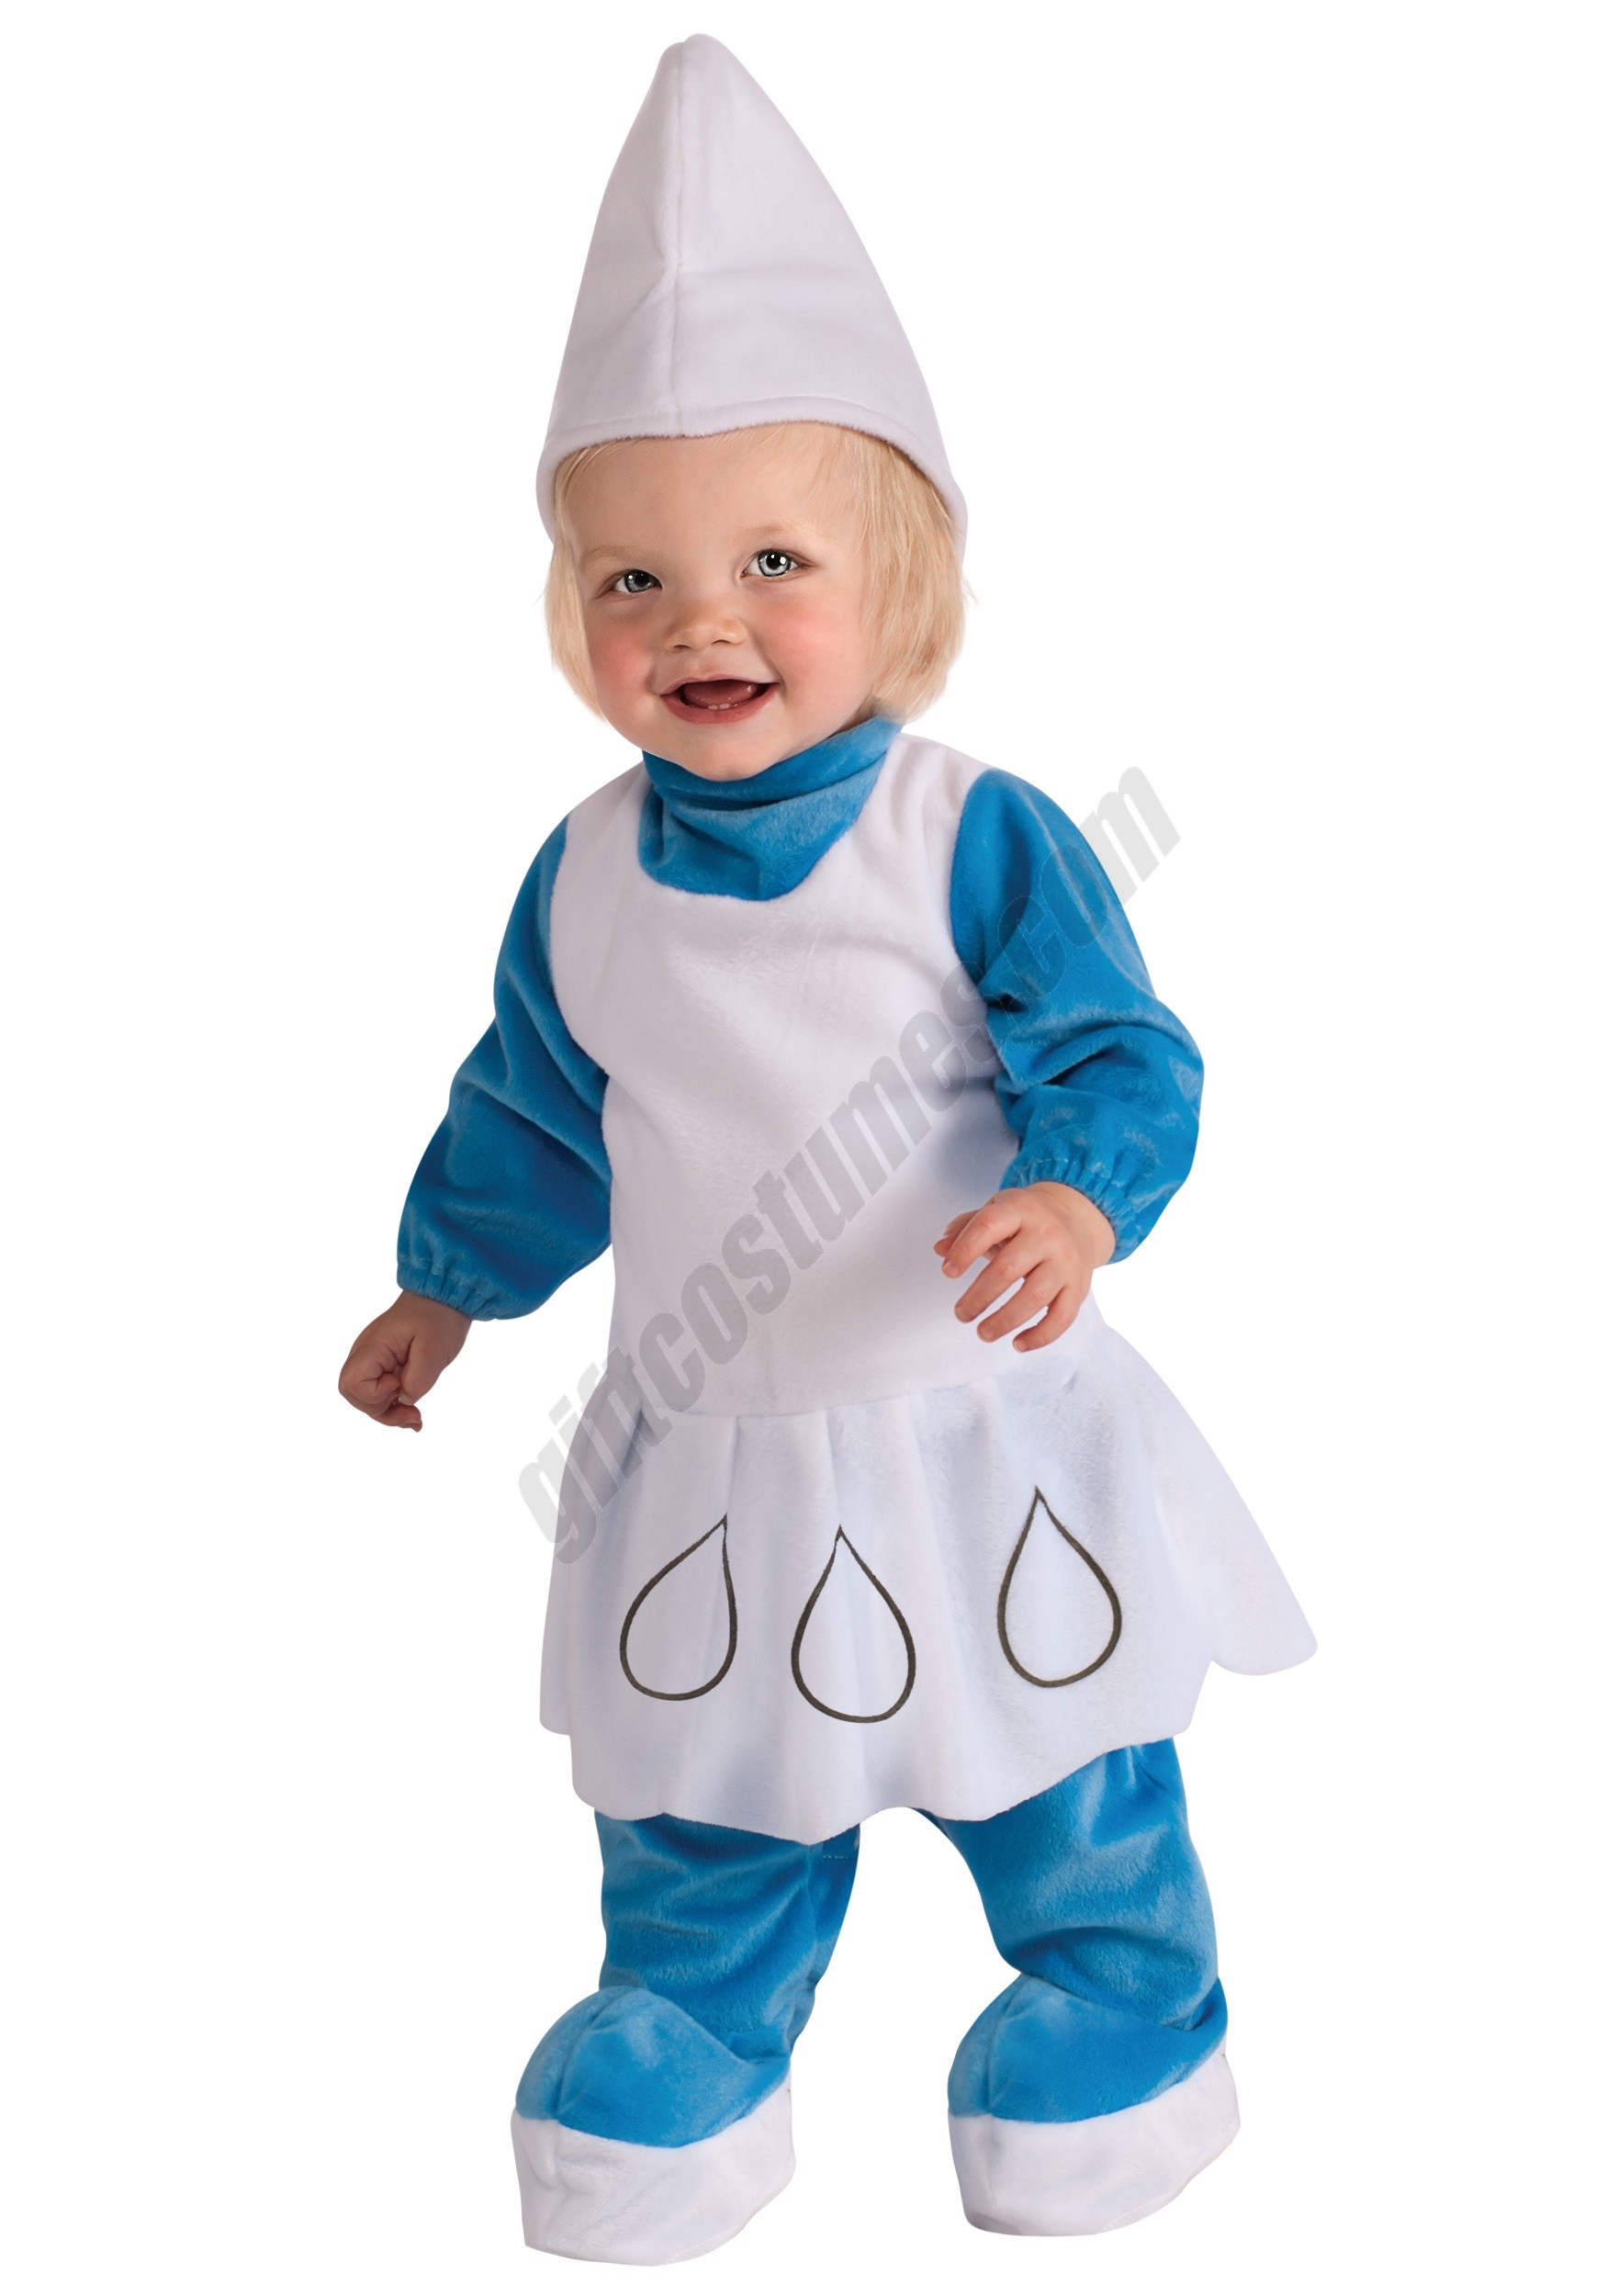 Infant Smurfette Costume Promotions - Infant Smurfette Costume Promotions